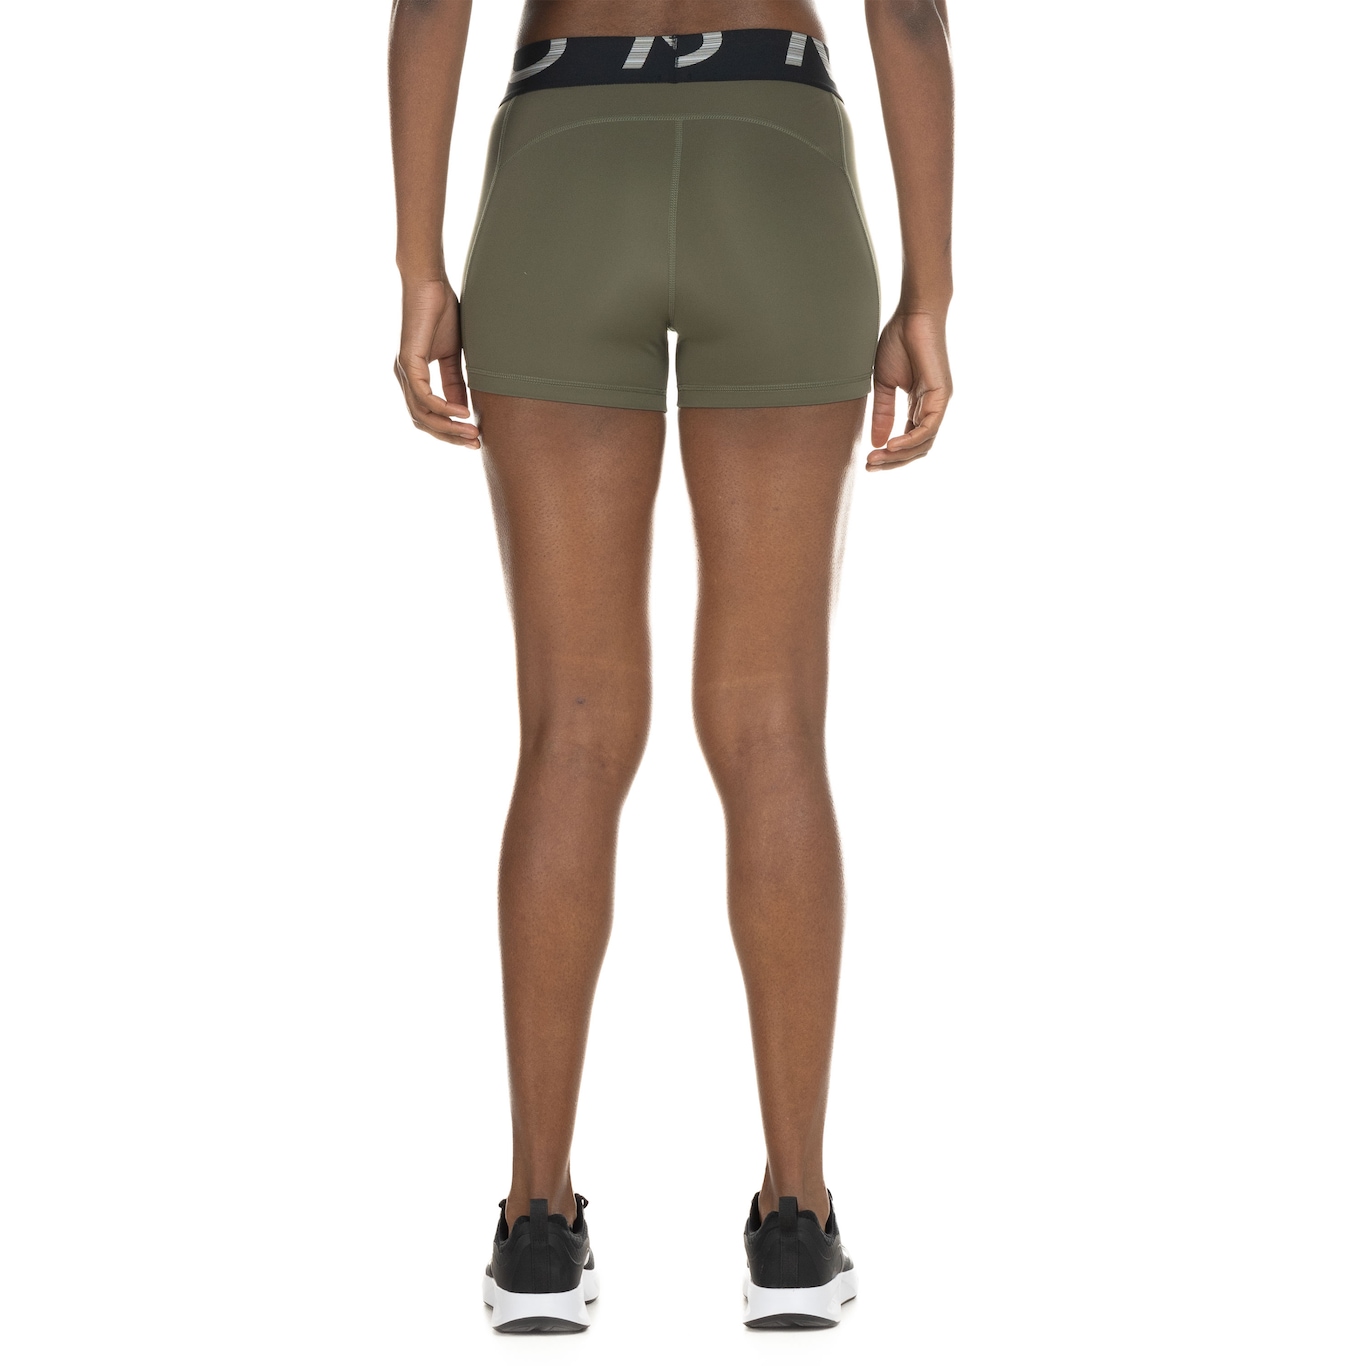 Shorts Nike Pro Dri-FIT GRX Feminino - Compre Agora